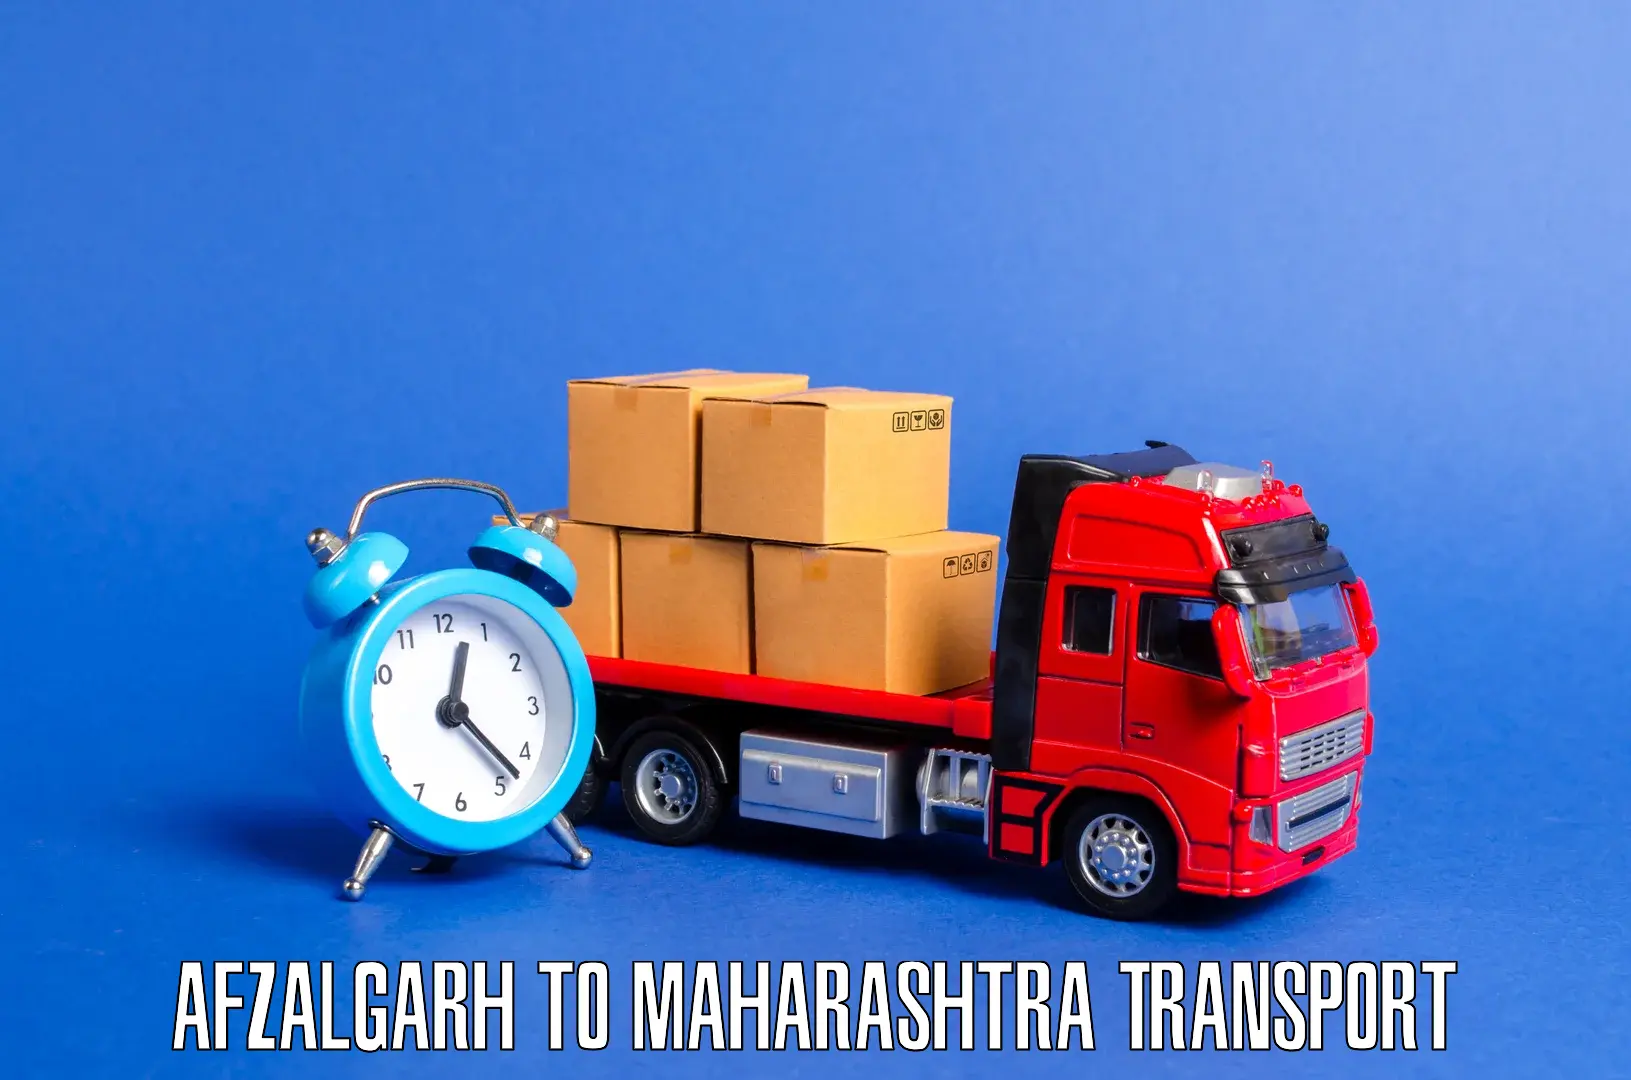 Truck transport companies in India Afzalgarh to Walchandnagar